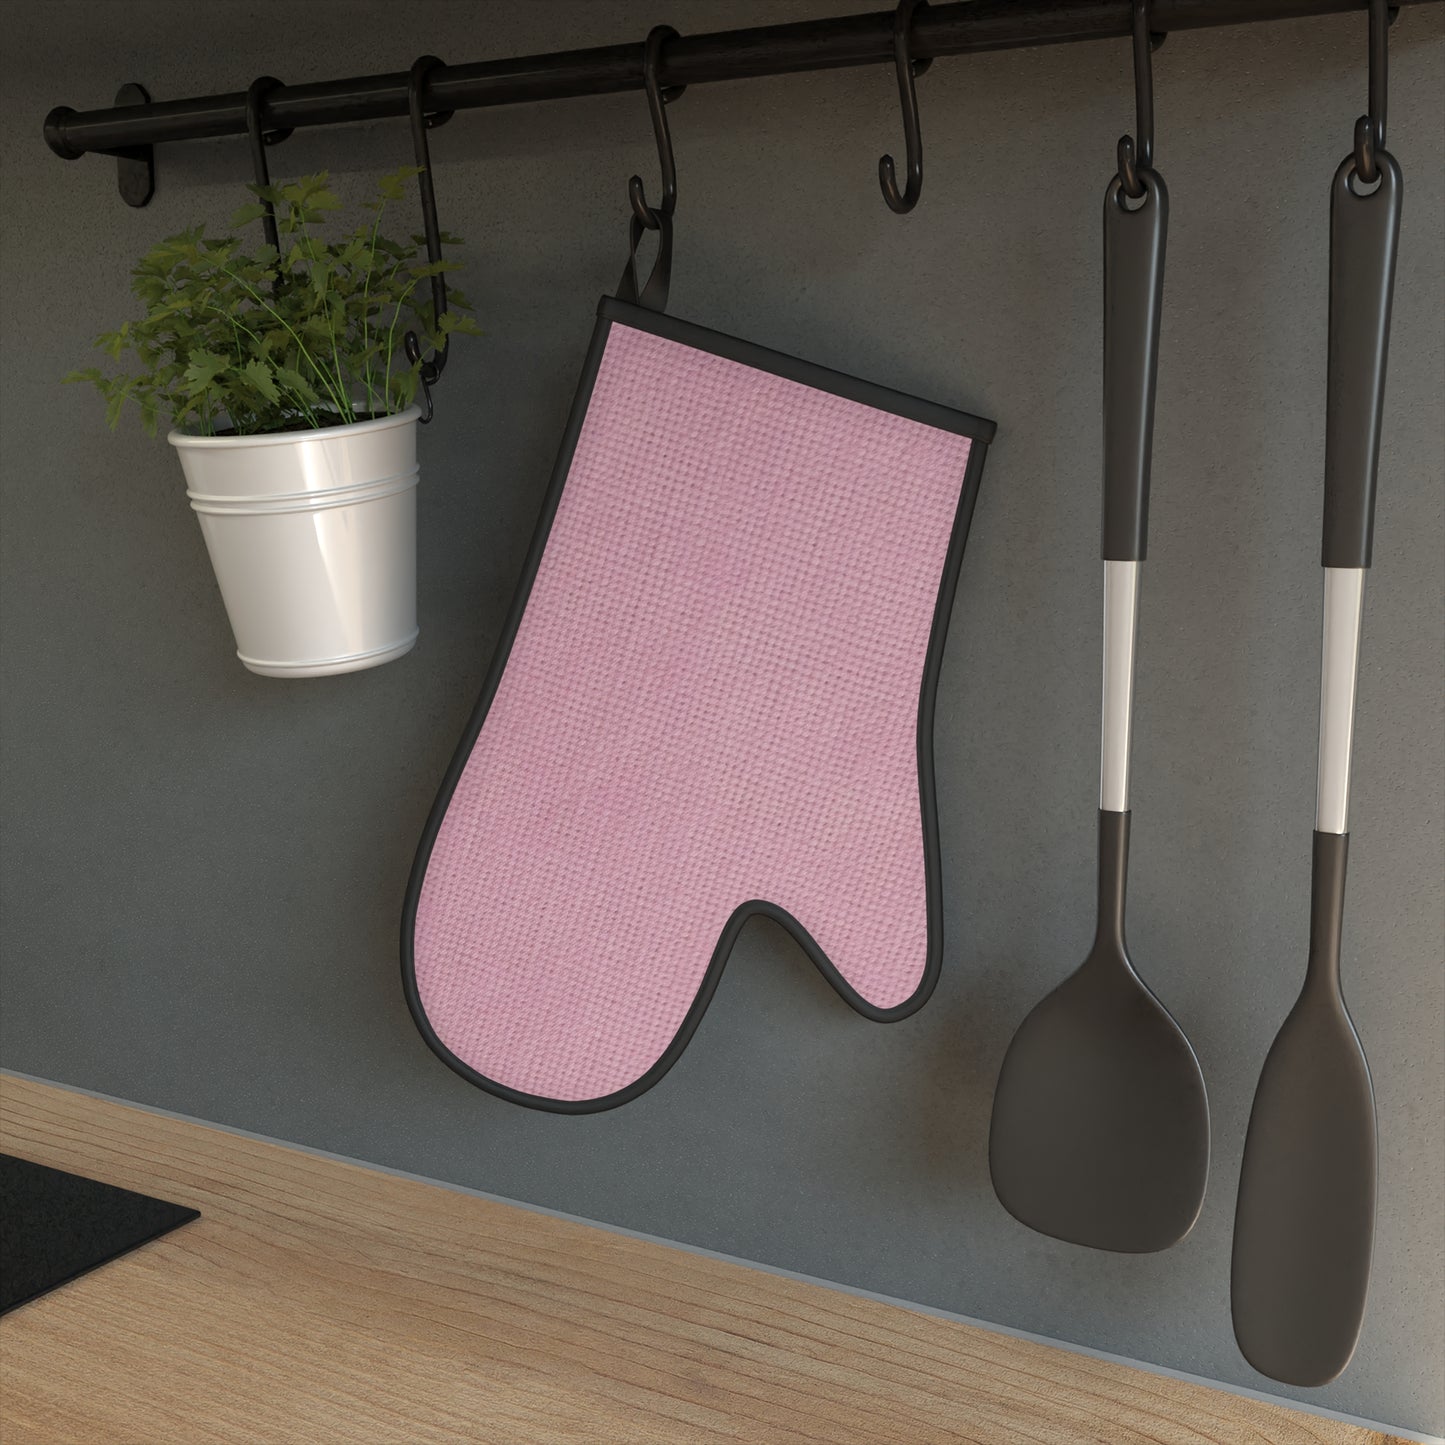 Blushing Garment Dye Pink: Denim-Inspired, Soft-Toned Fabric - Oven Glove